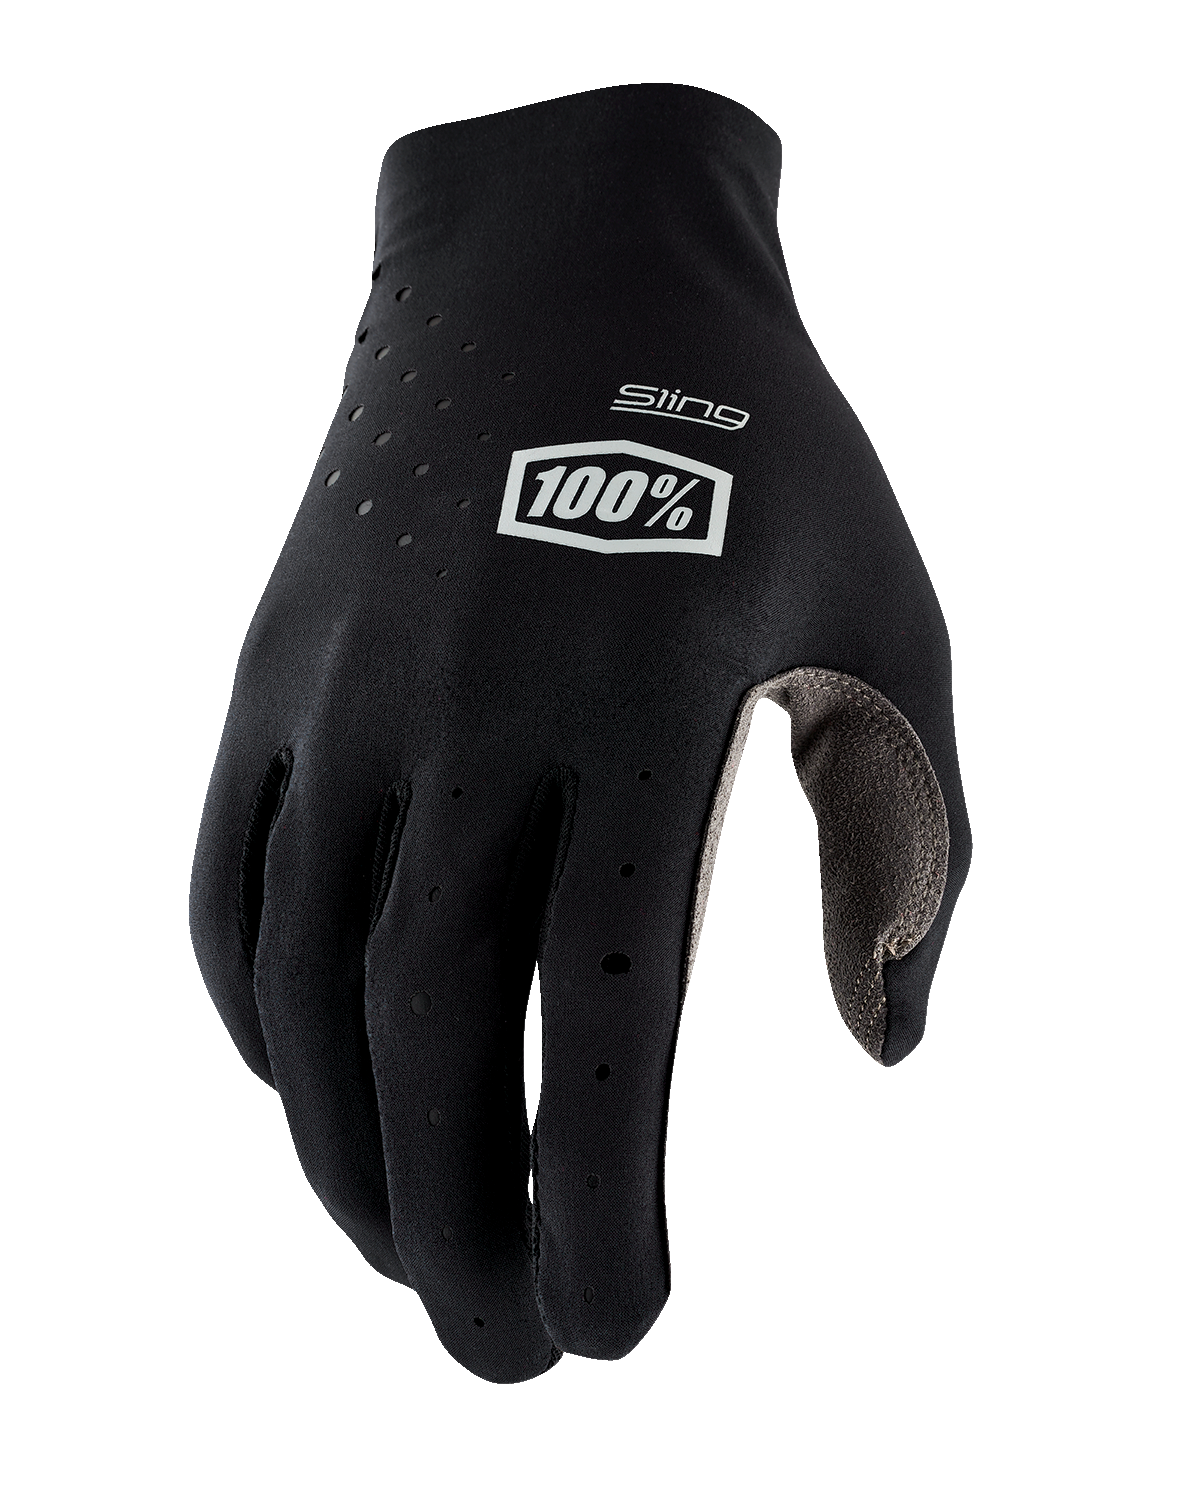 100% Sling MX Gloves - Black - Small 10023-00000